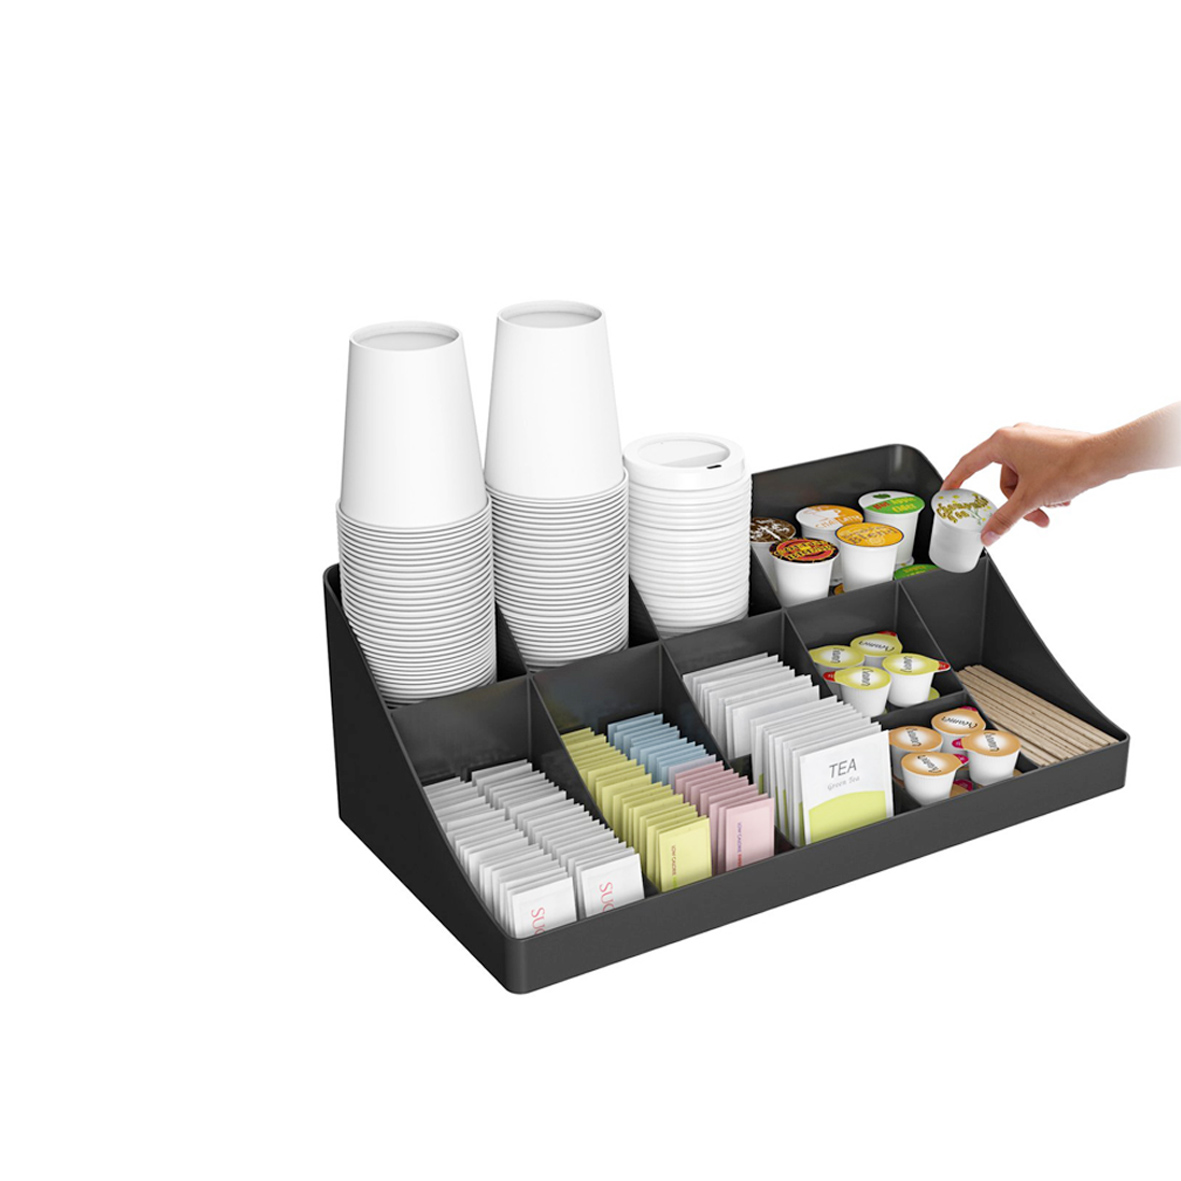 I-Acrylic Coffee Holder Organizer/Countertop Coffee Storage Box